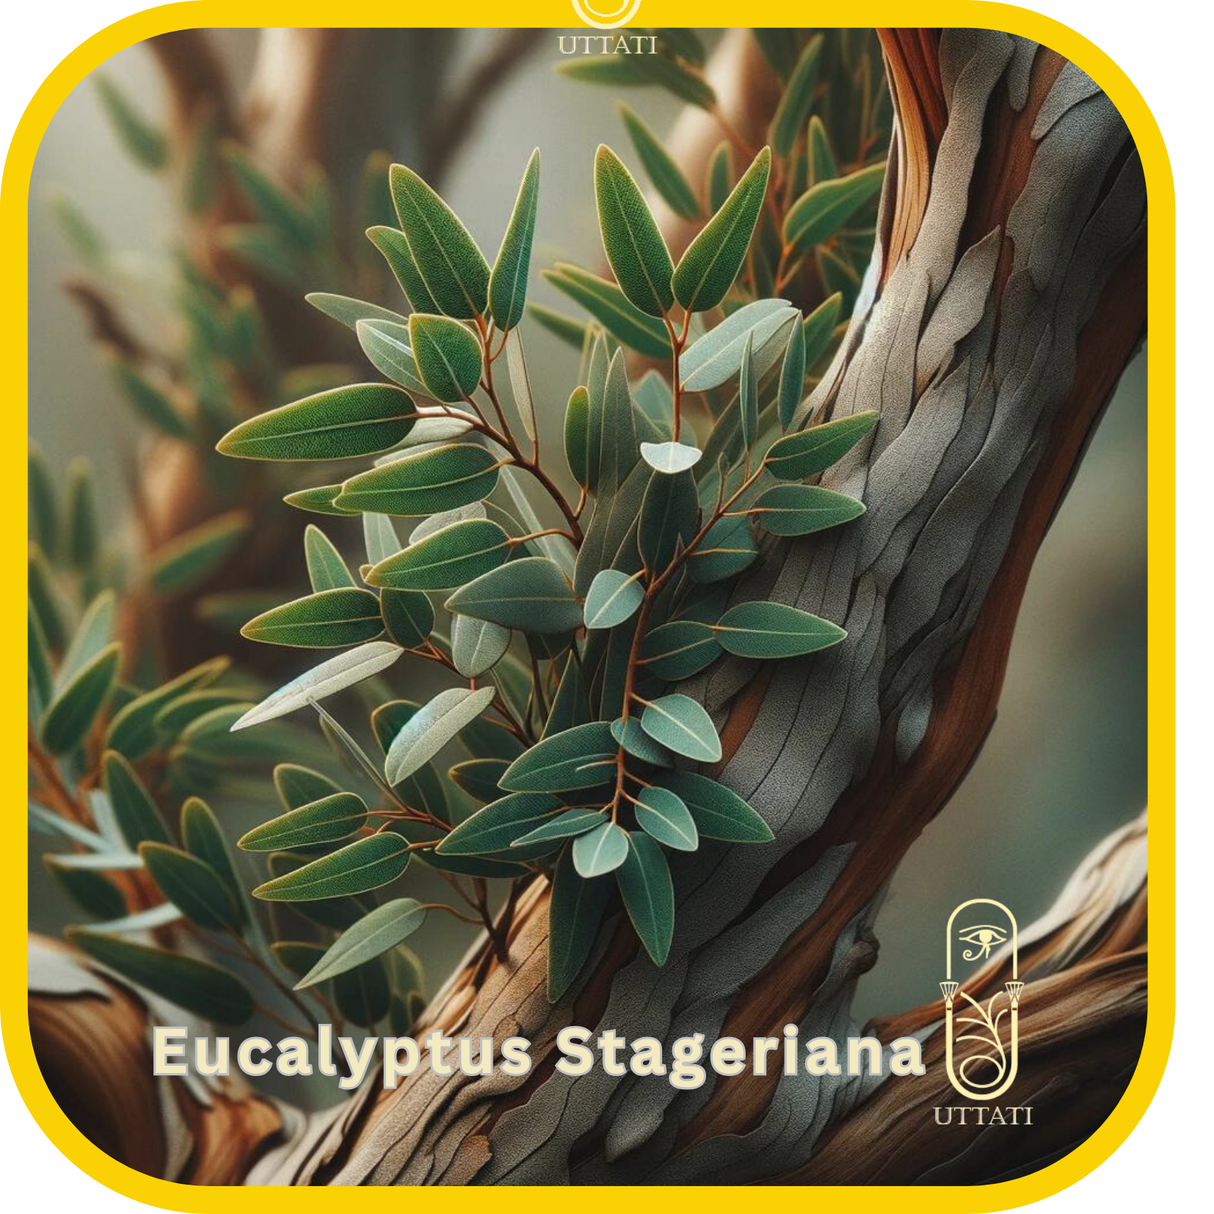 Eucalyptus Stageriana